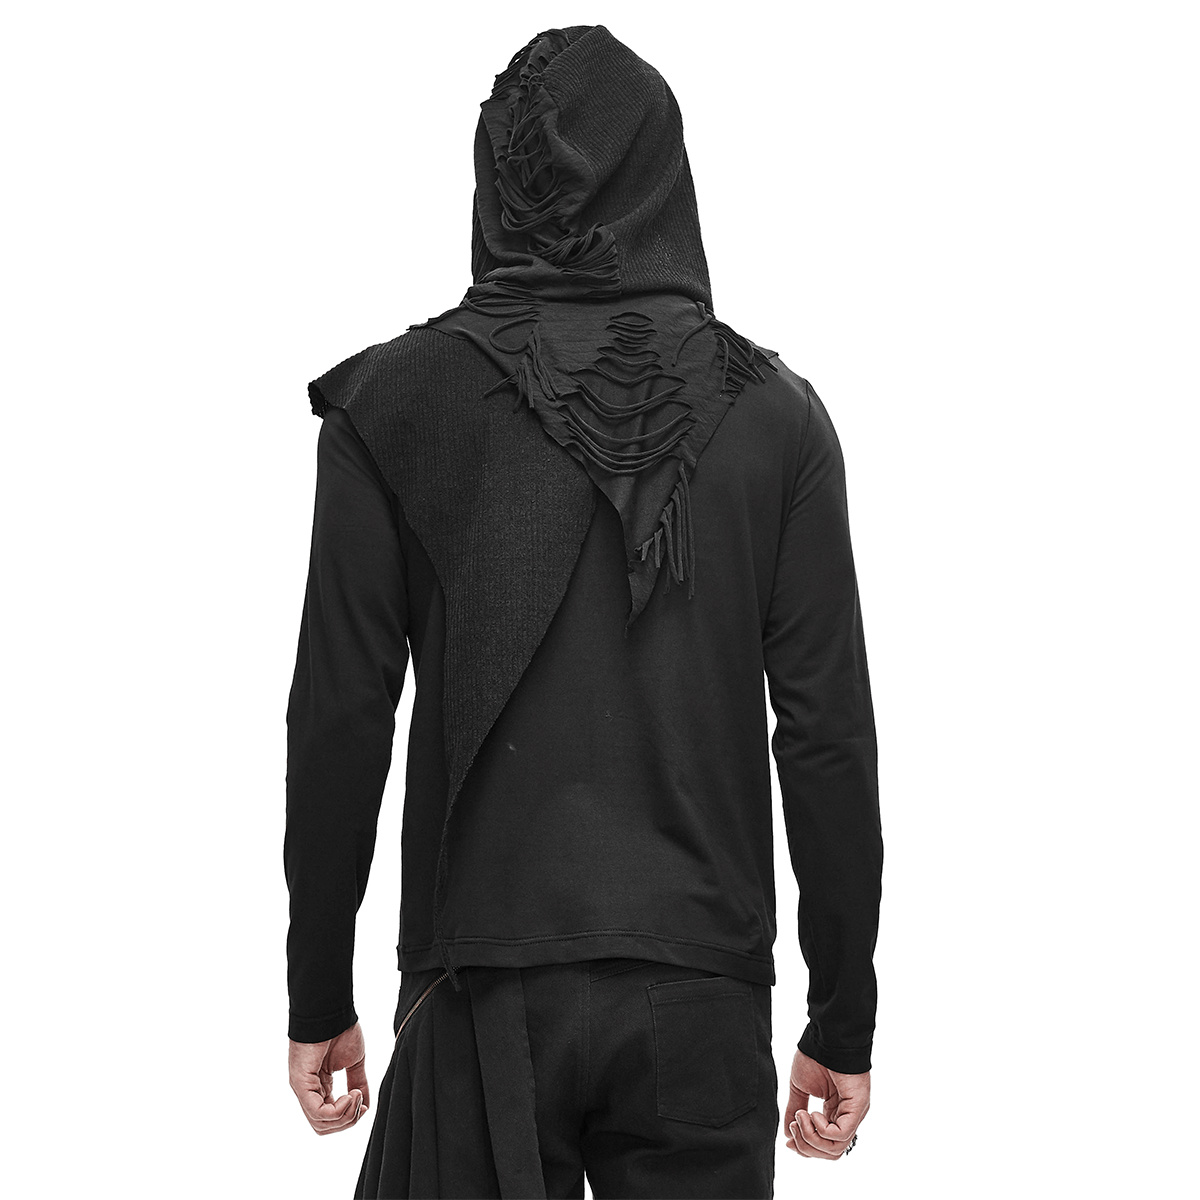 Gothic Punk Style Long Sleeves Hoodie / Black Zipper Cutout Top / Alternative Fashion - HARD'N'HEAVY